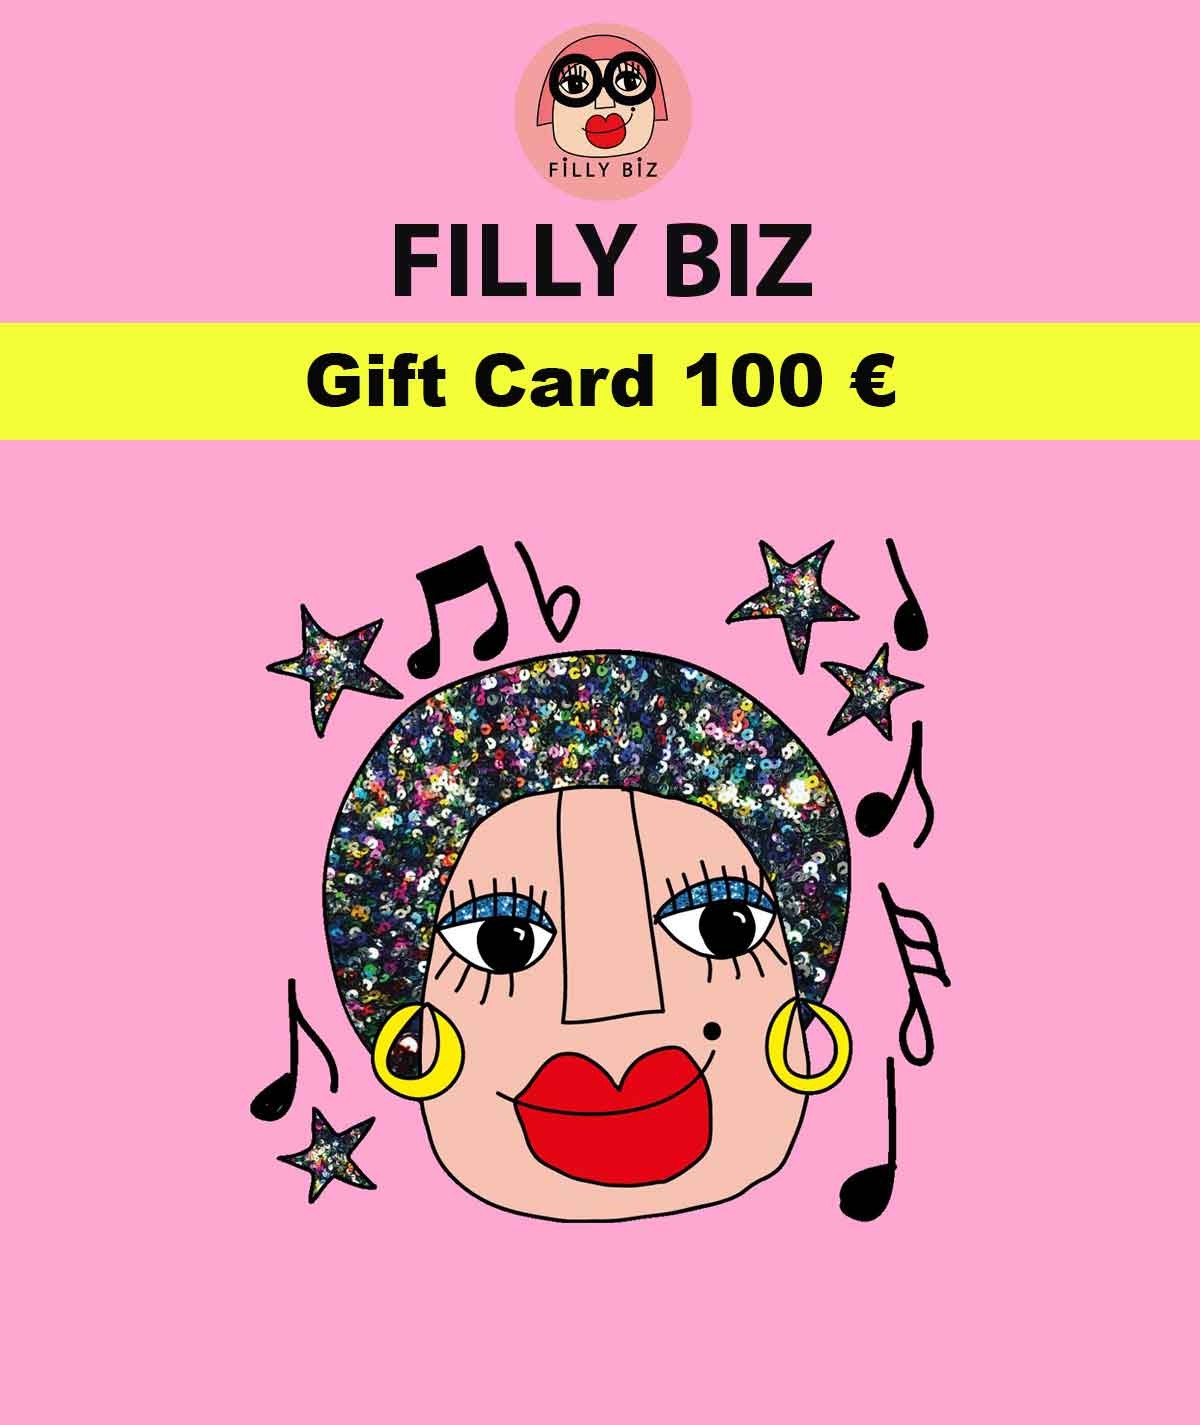 Filly Biz Gift Card 100 €